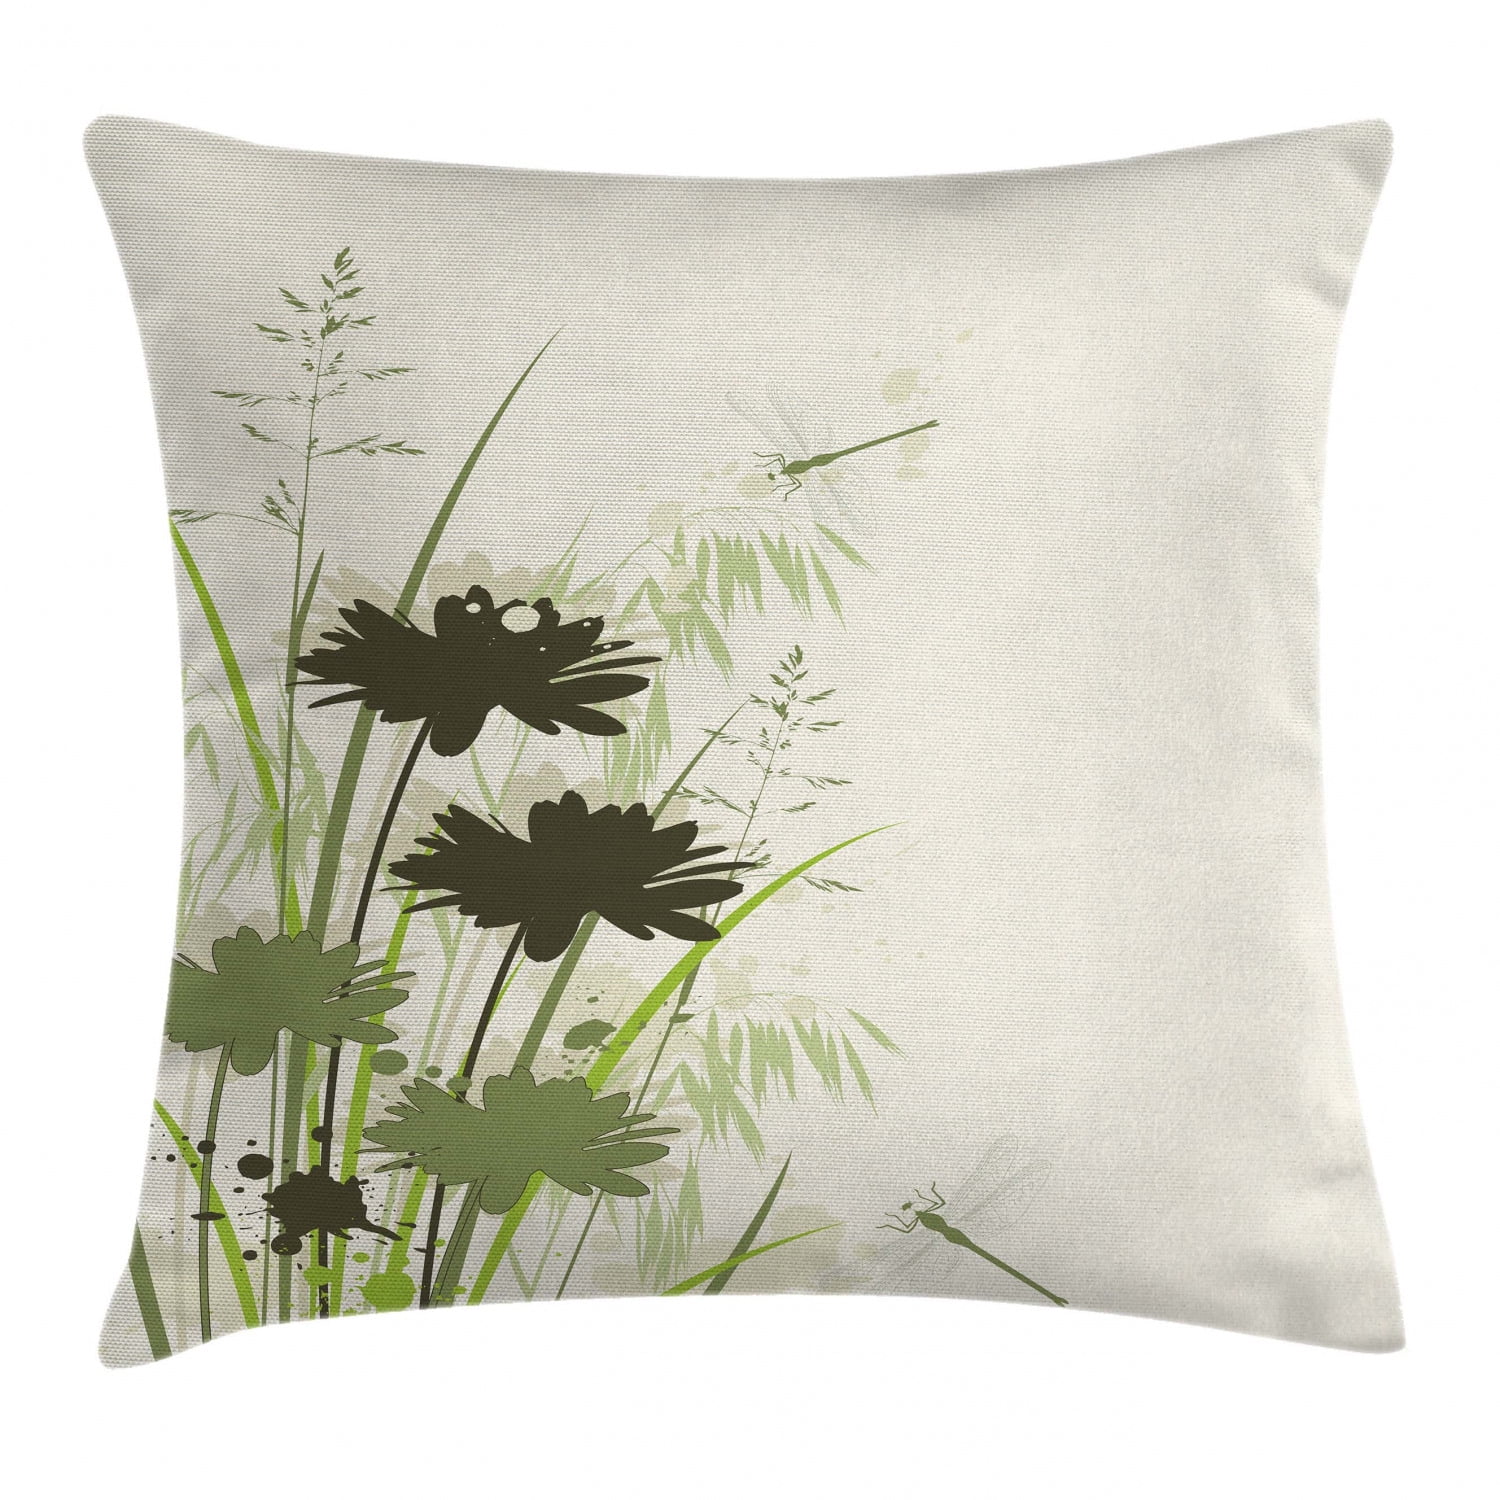 Blue Japanese Background Botanic Garden Flower Leaf Pillowcase,Home Decoration Pillowcase,Cushion Cover for Sofa 18 X 18 Inches 